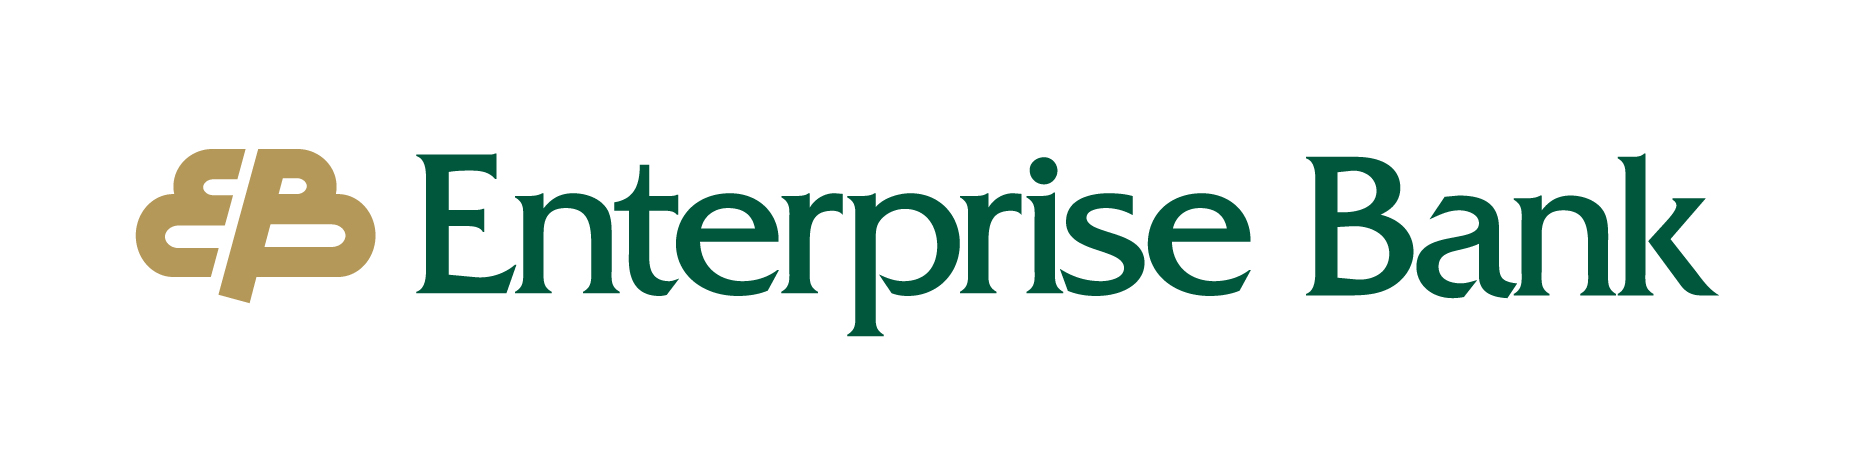 enterprise-bank-logo-1